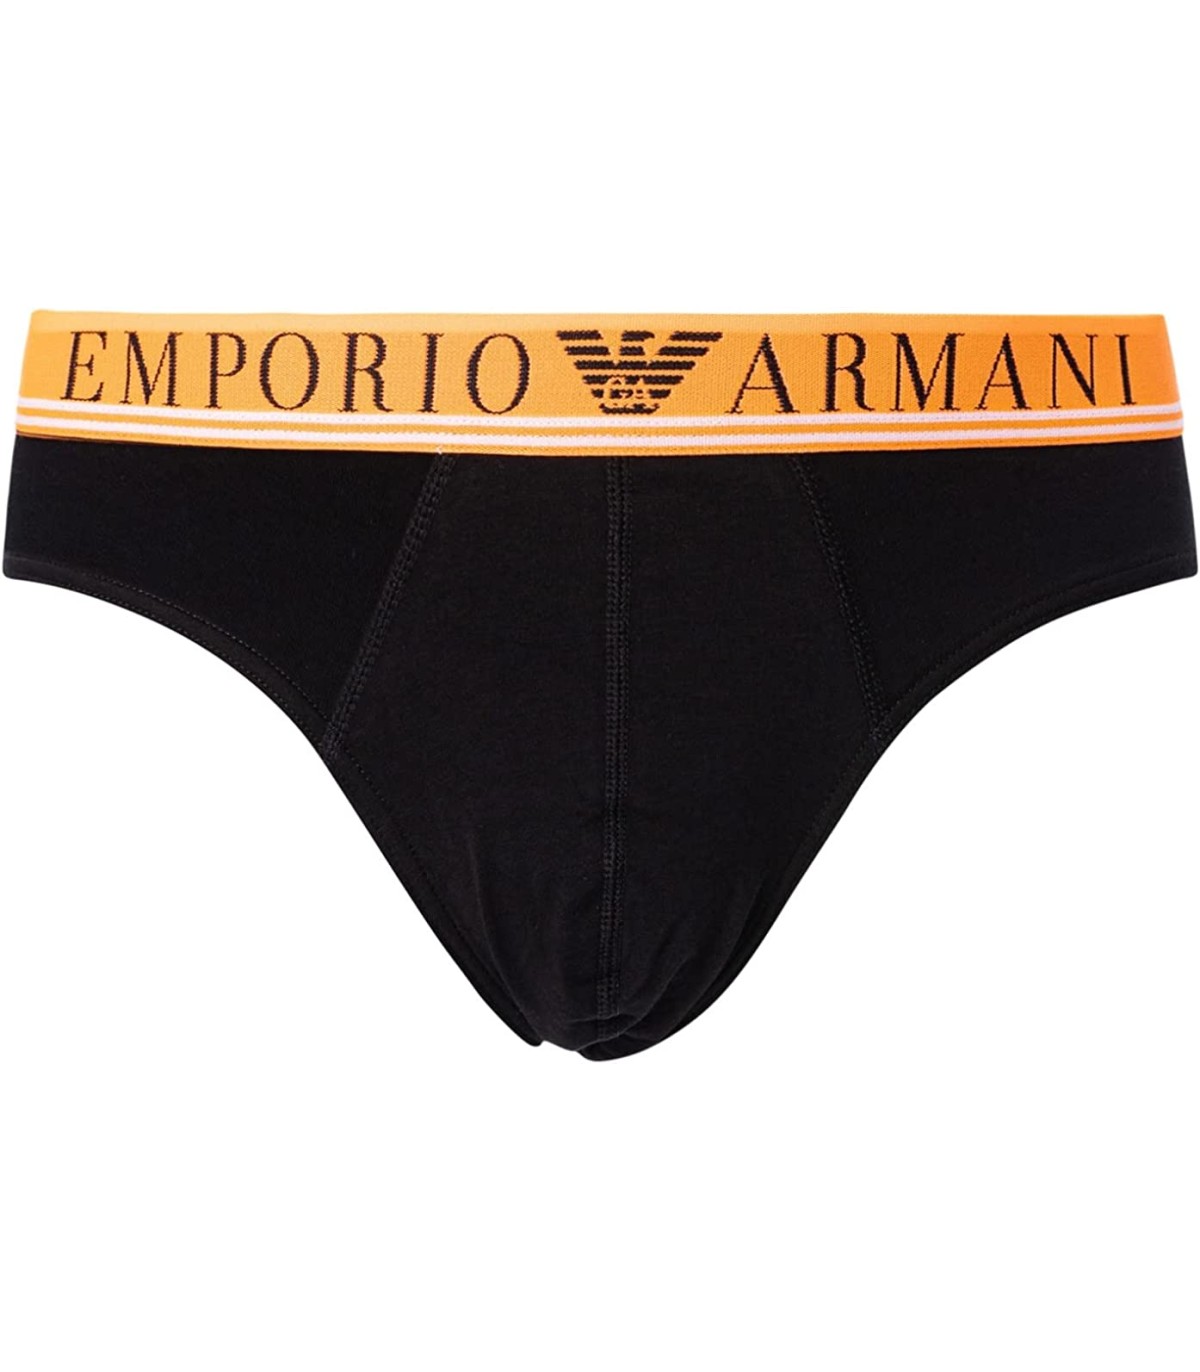 EMPORIO ARMANI SLIP UOMO 3-PACK ART. 111734 3R723